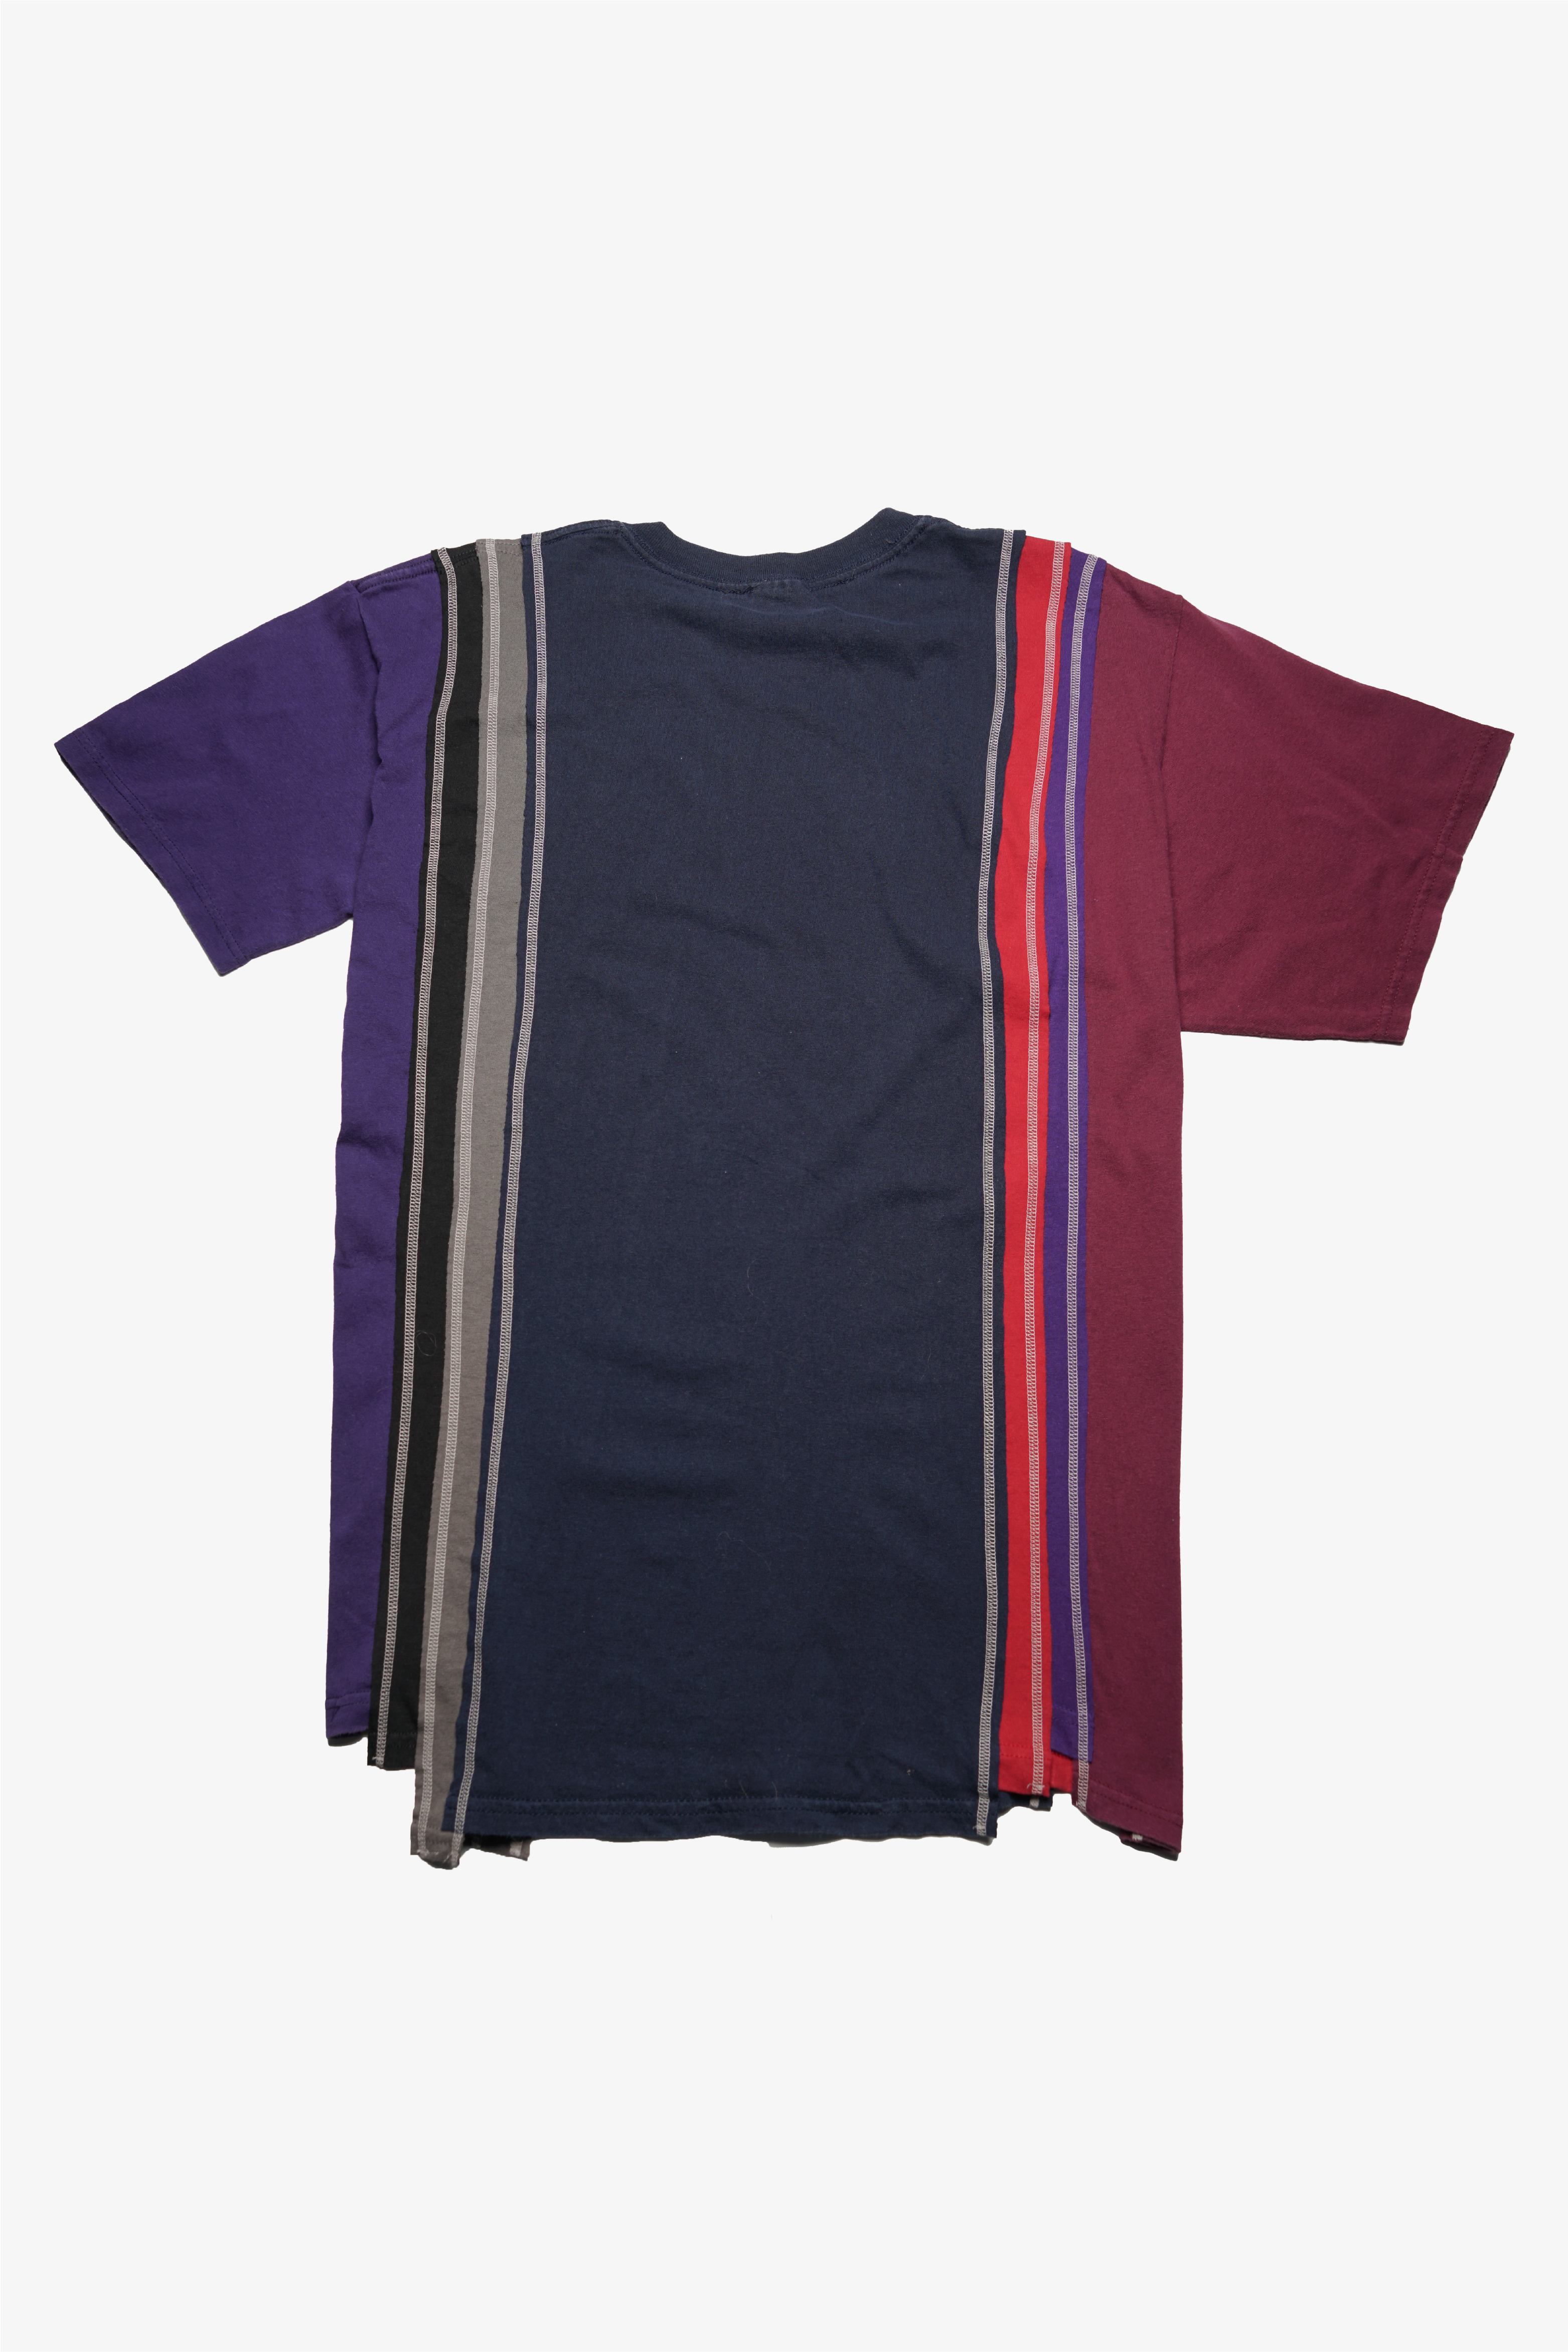 Selectshop FRAME - NEEDLES 7 Cuts College Tee XL(B) T-Shirts Dubai